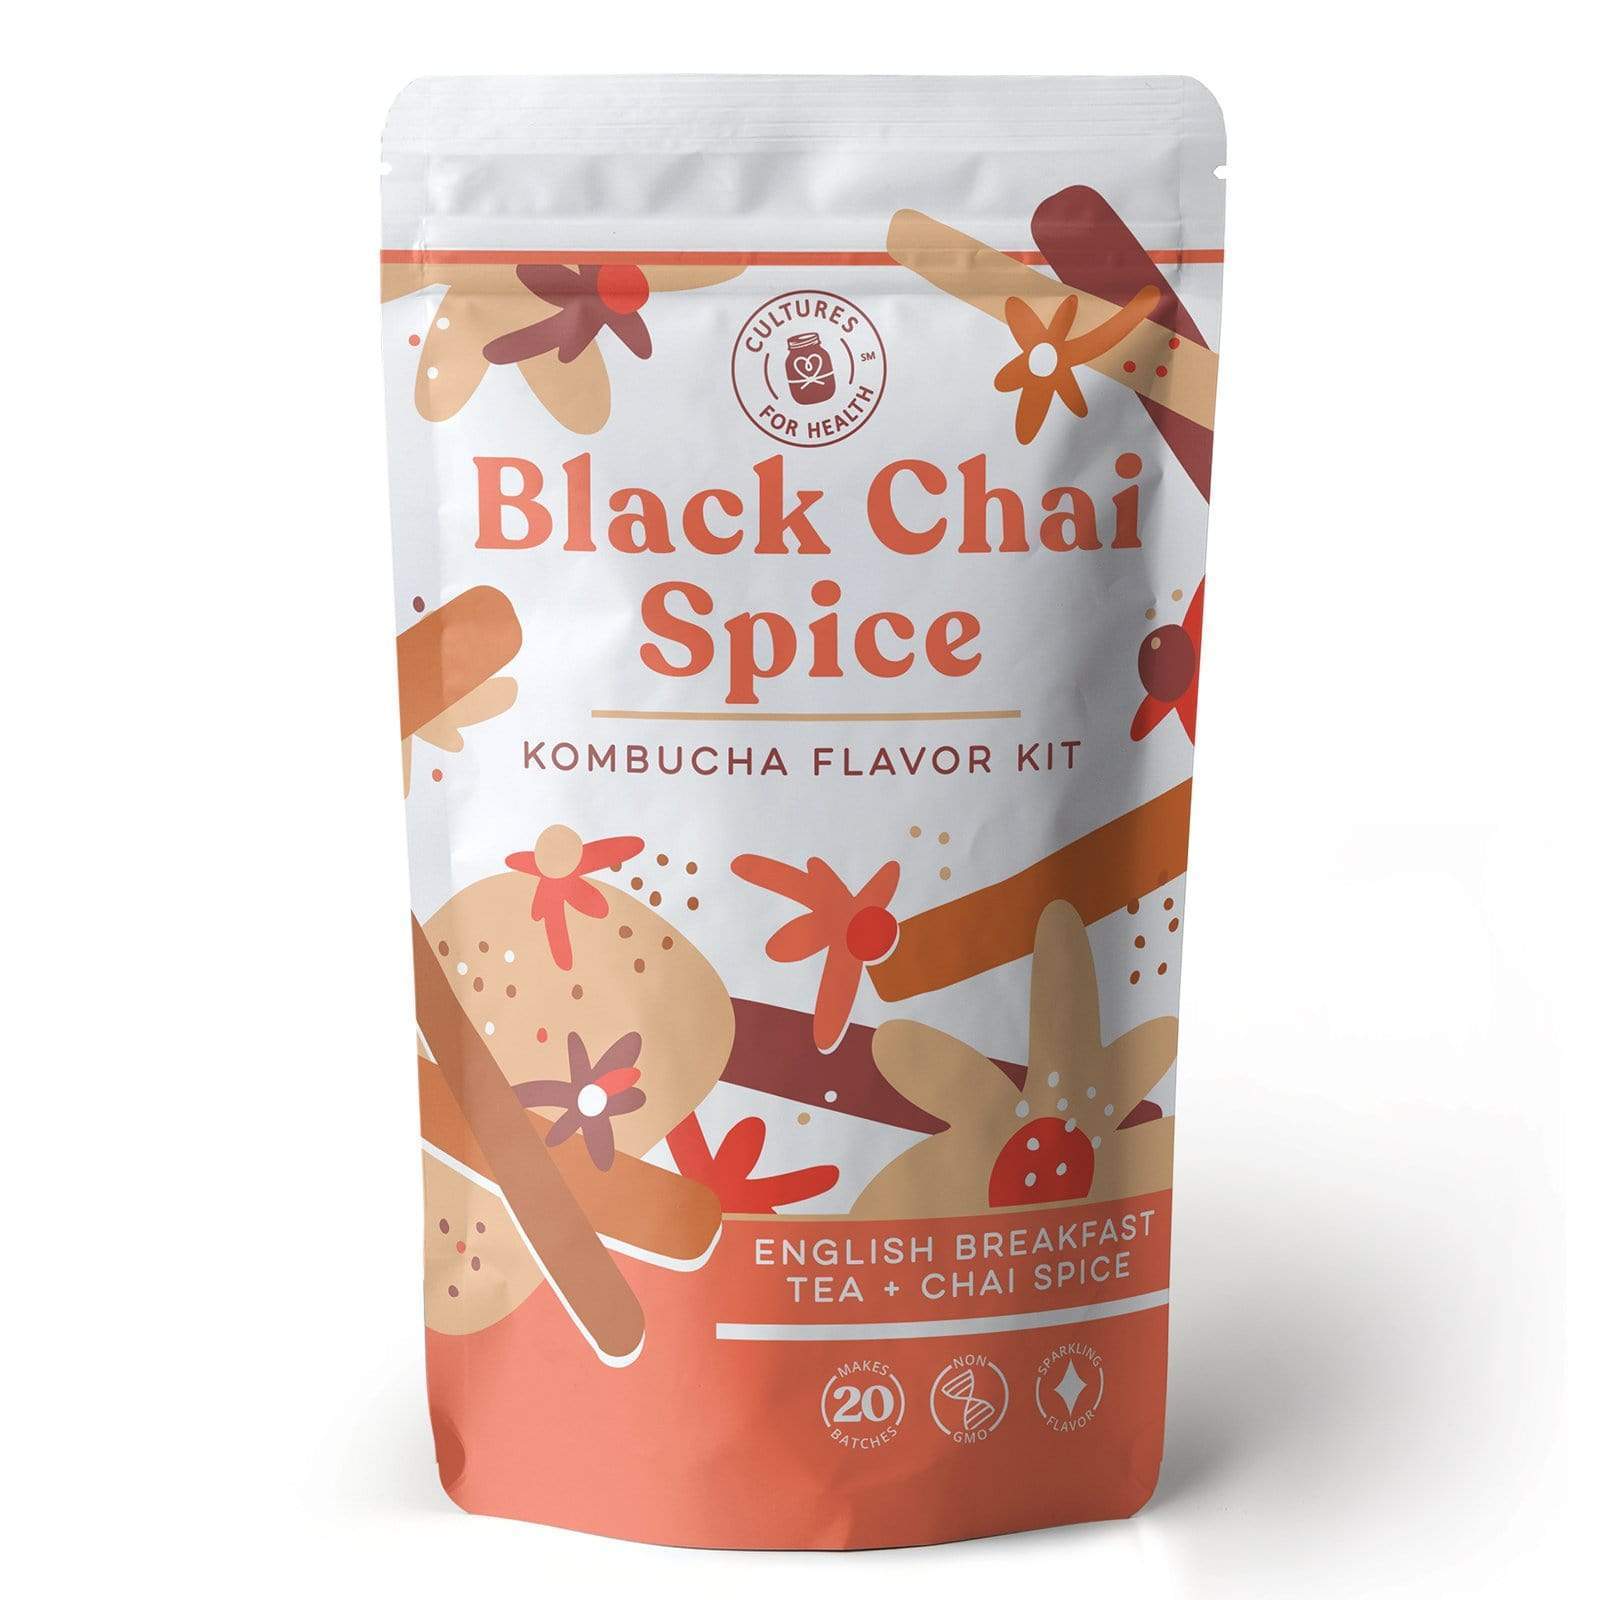 Kombucha Black Chai Spice Kombucha Flavor Kit